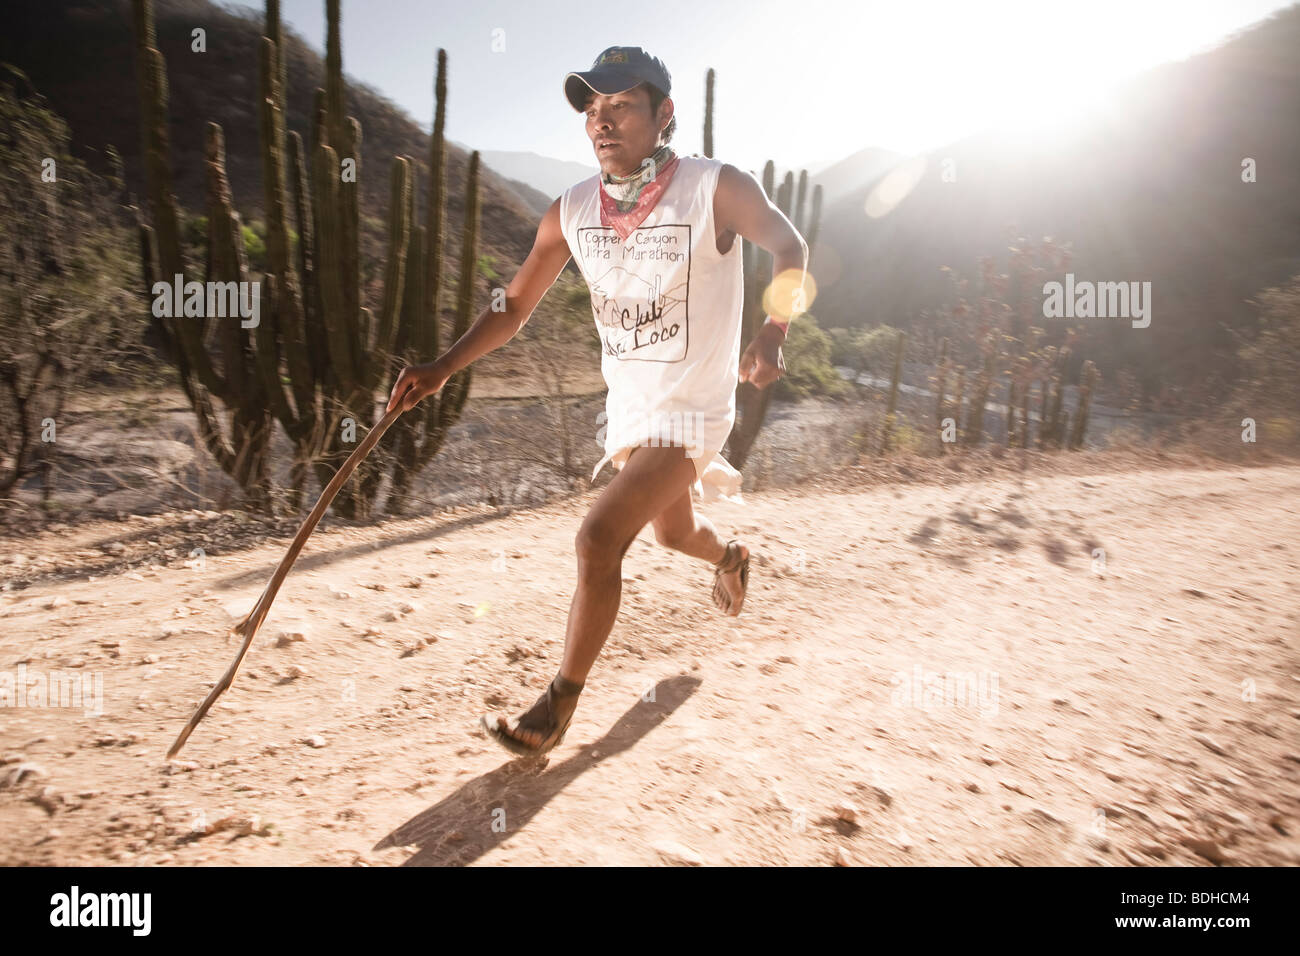 A Tarahumara Runner Running With A Stick As A Pole During An Ultra Stock Photo Alamy